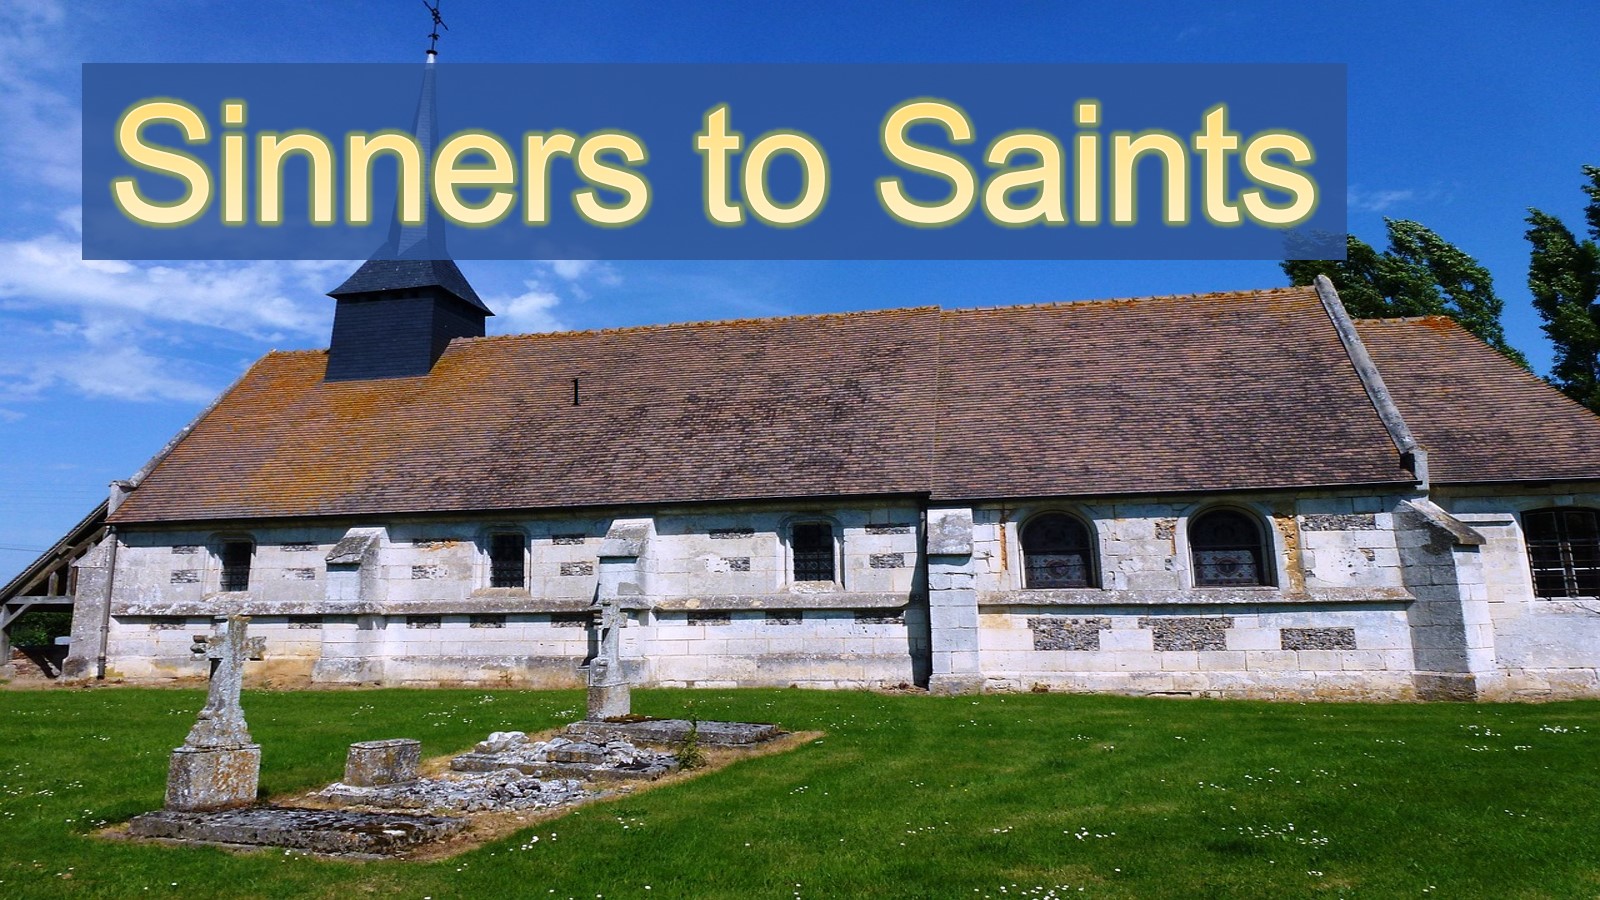 Sinners to Saints